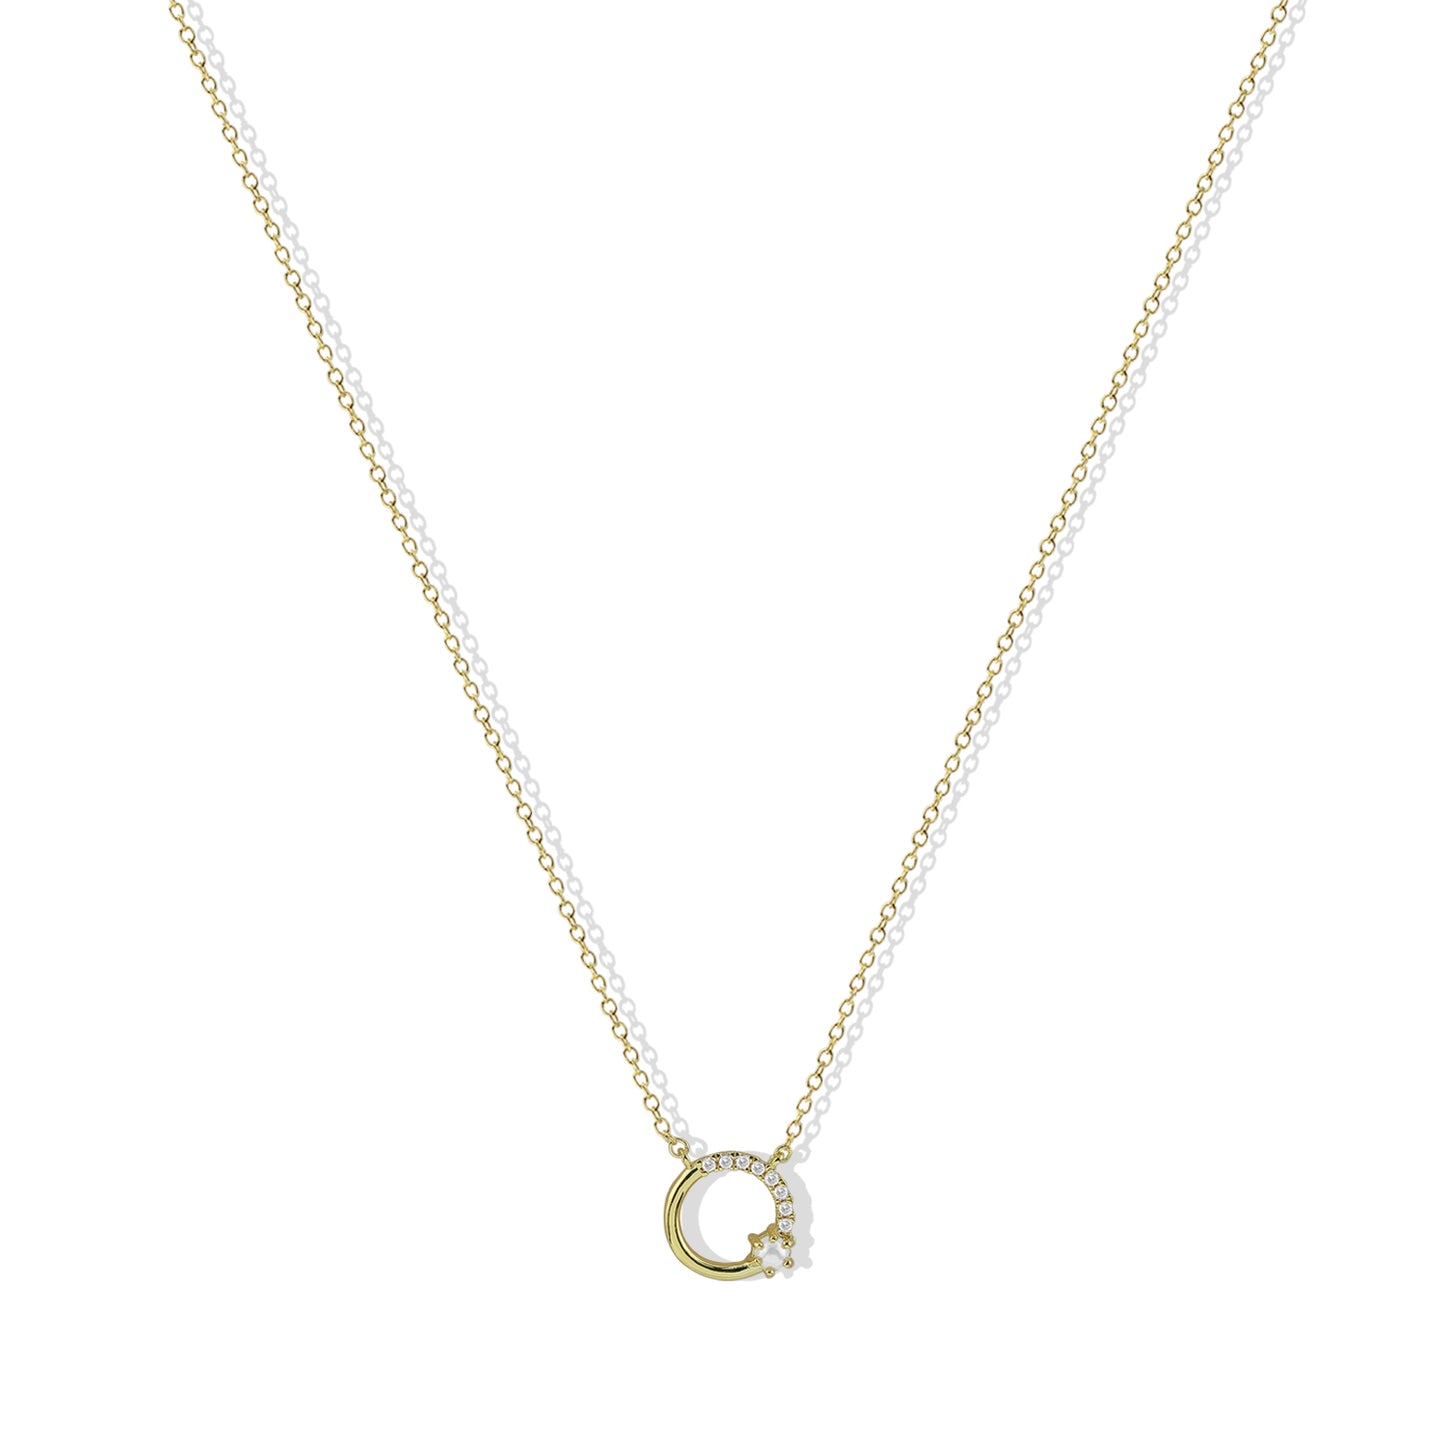 The Perla Infinity Necklace